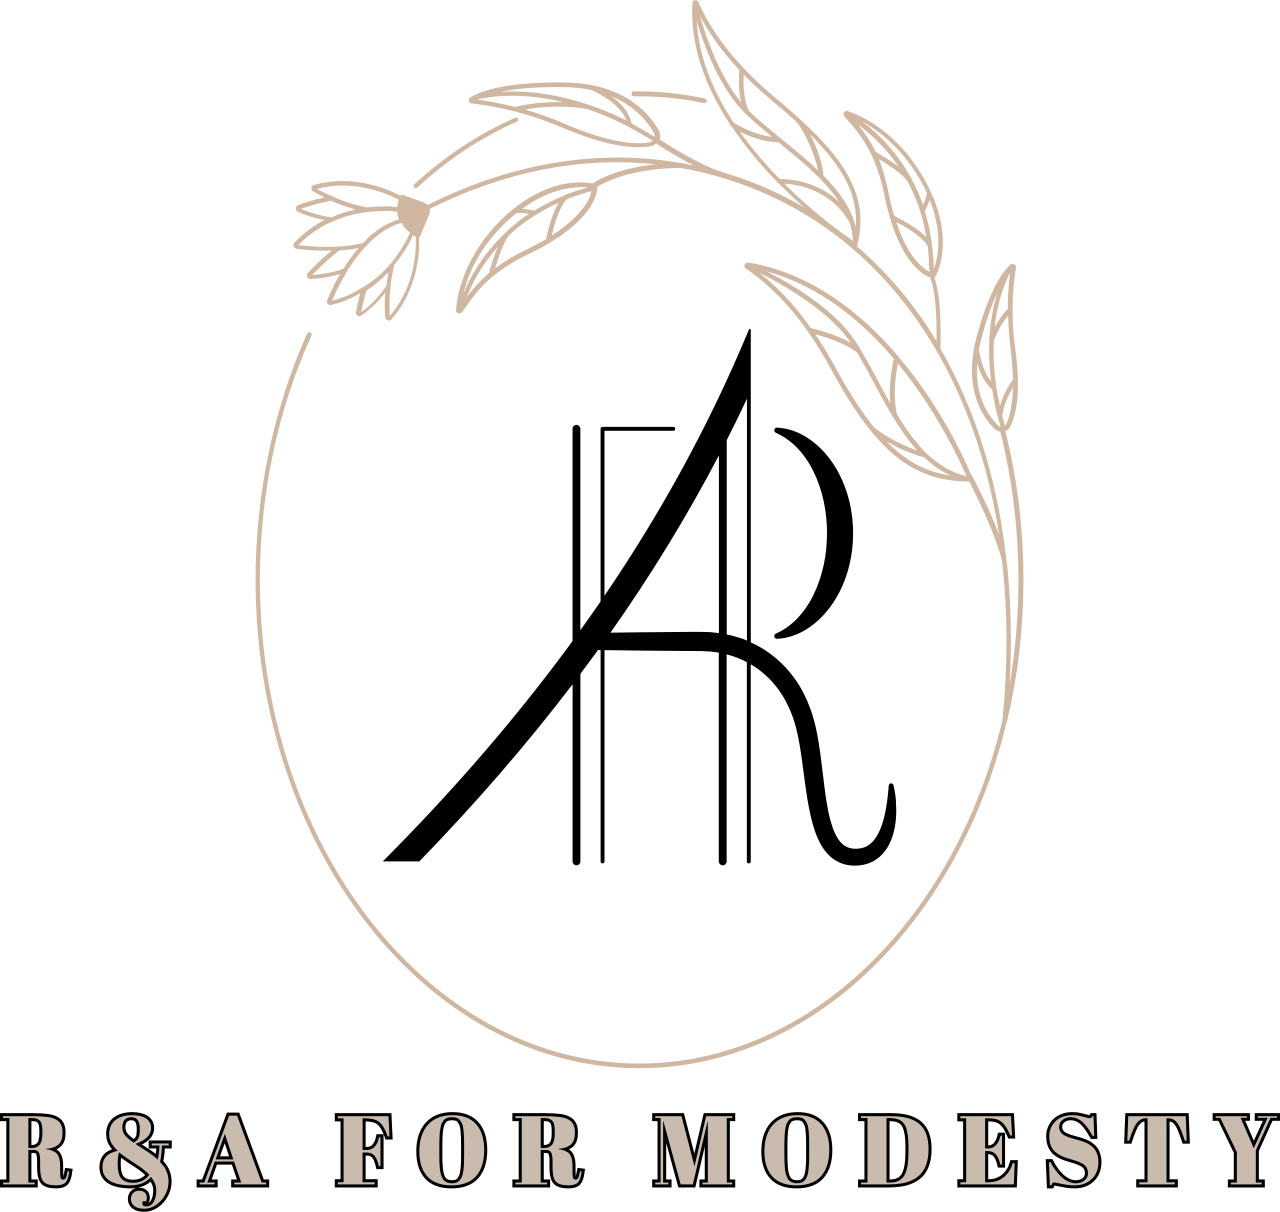 R&A FOR MODESTY's logo